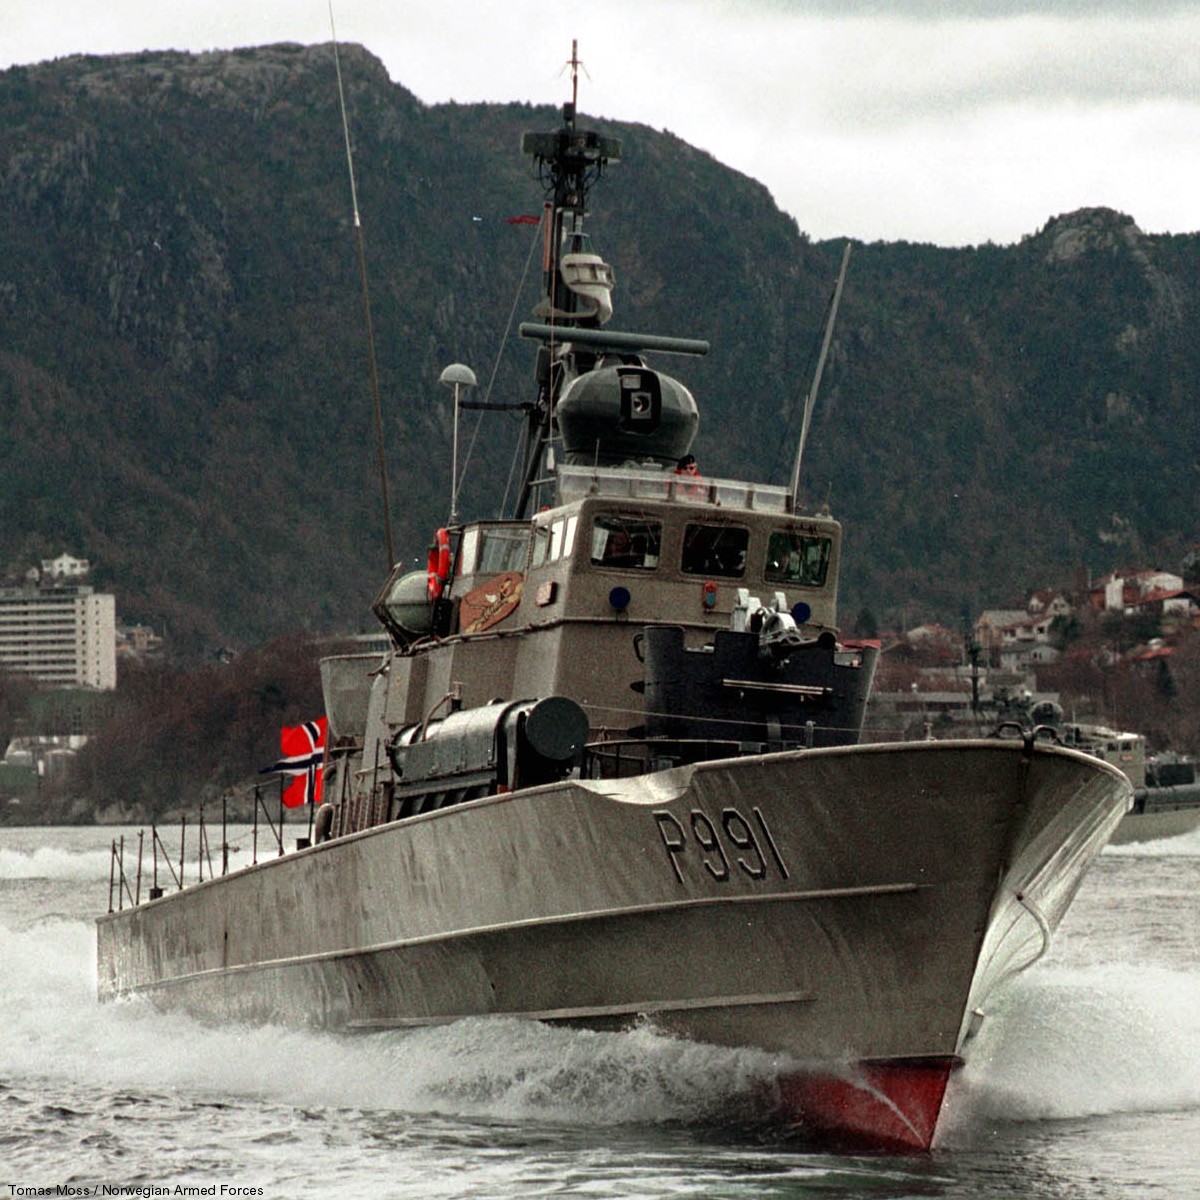 p-991 knm teist hauk class fast attack missile torpedo craft boat norwegian navy sjøforsvaret 03